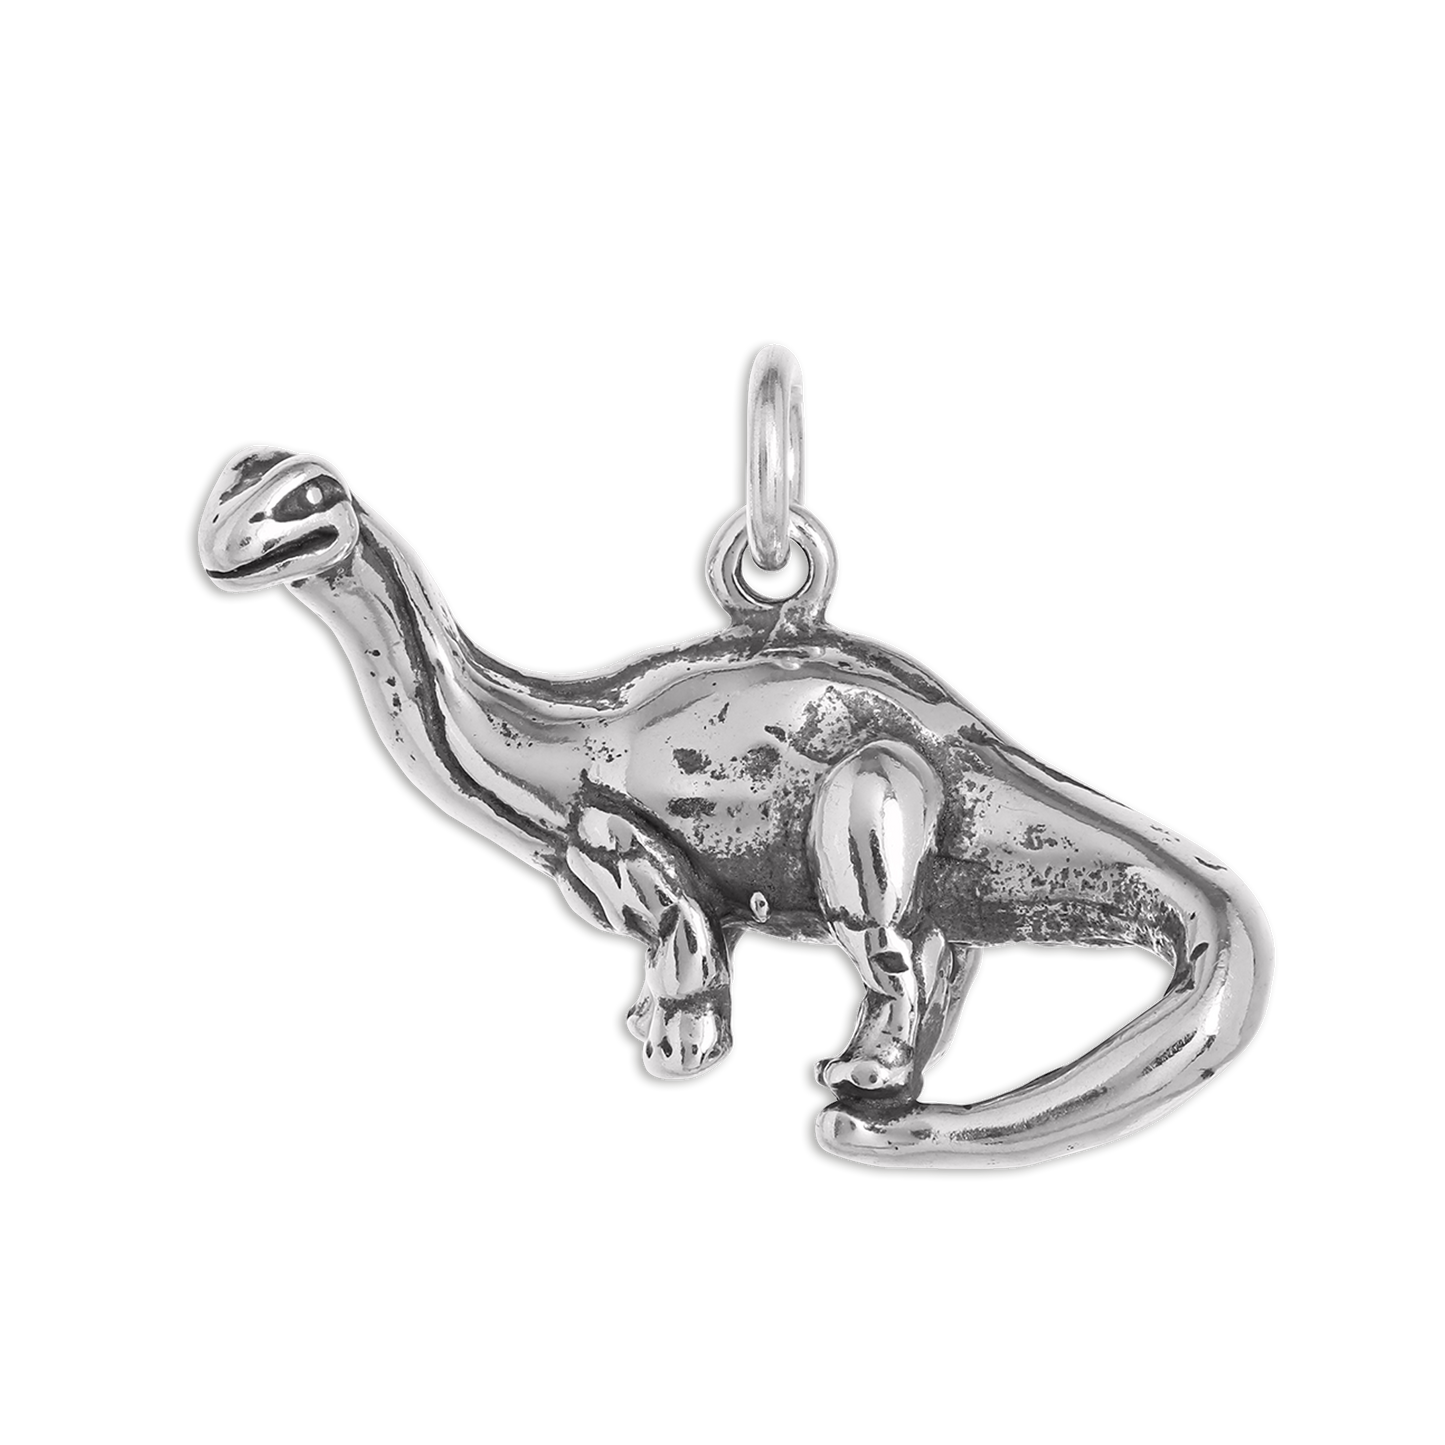 Large 3D Sterling Silver Brontosaurus Dinosaur Charm